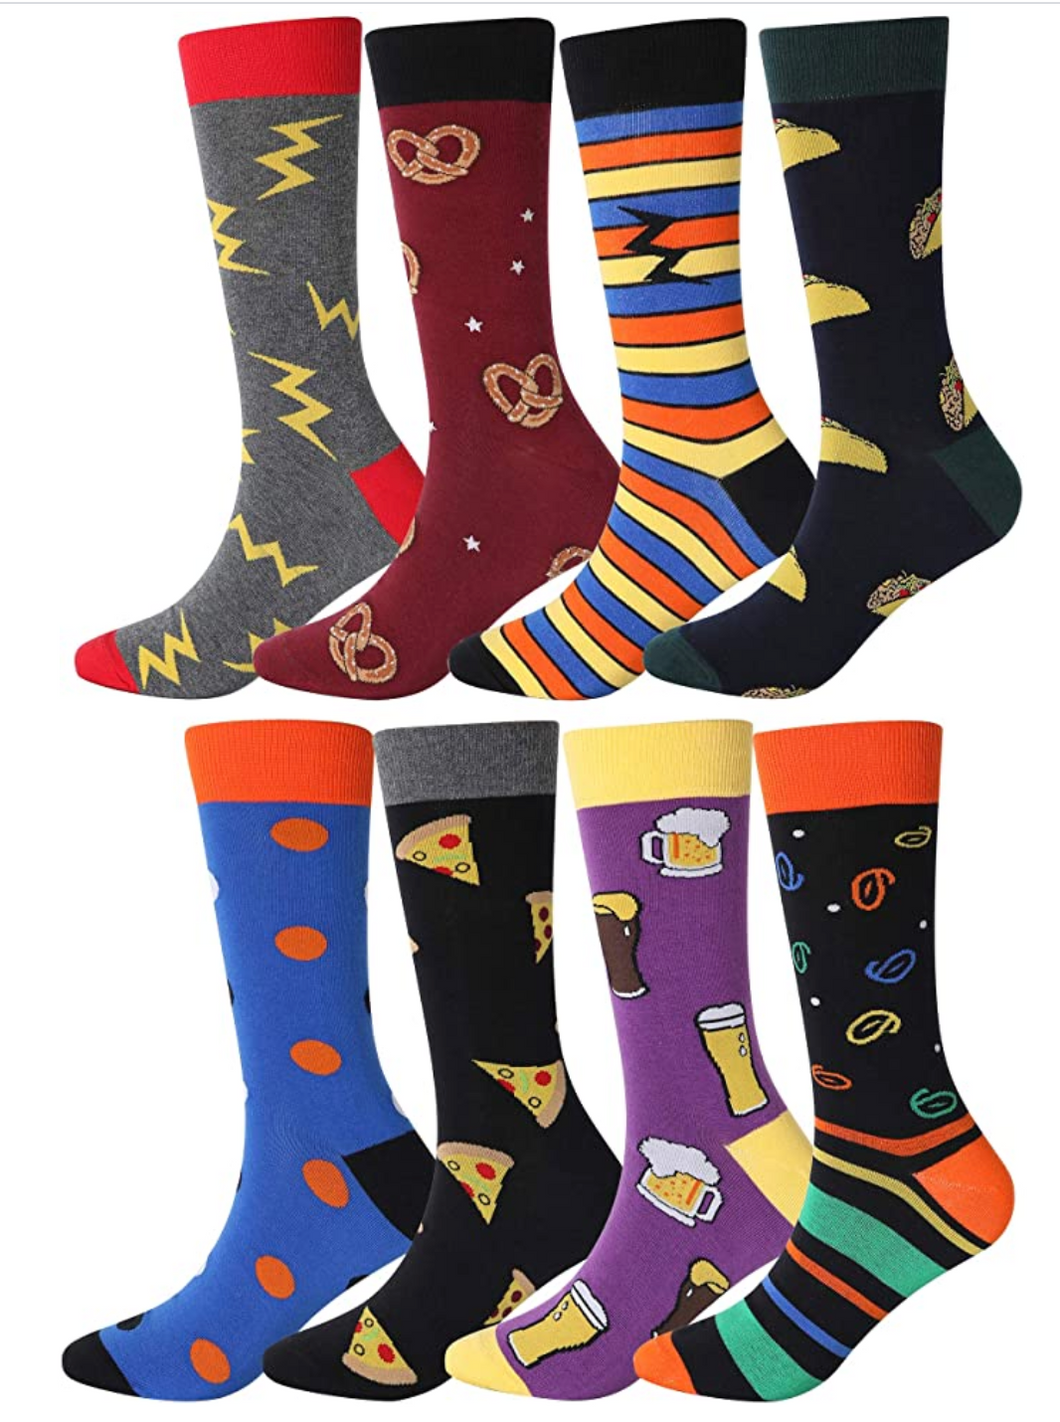 YEJIMONG Men's Colorful Novelty Dress Socks - Food Funky Pattern (8 Pairs / Size 9-12 / Cotton)